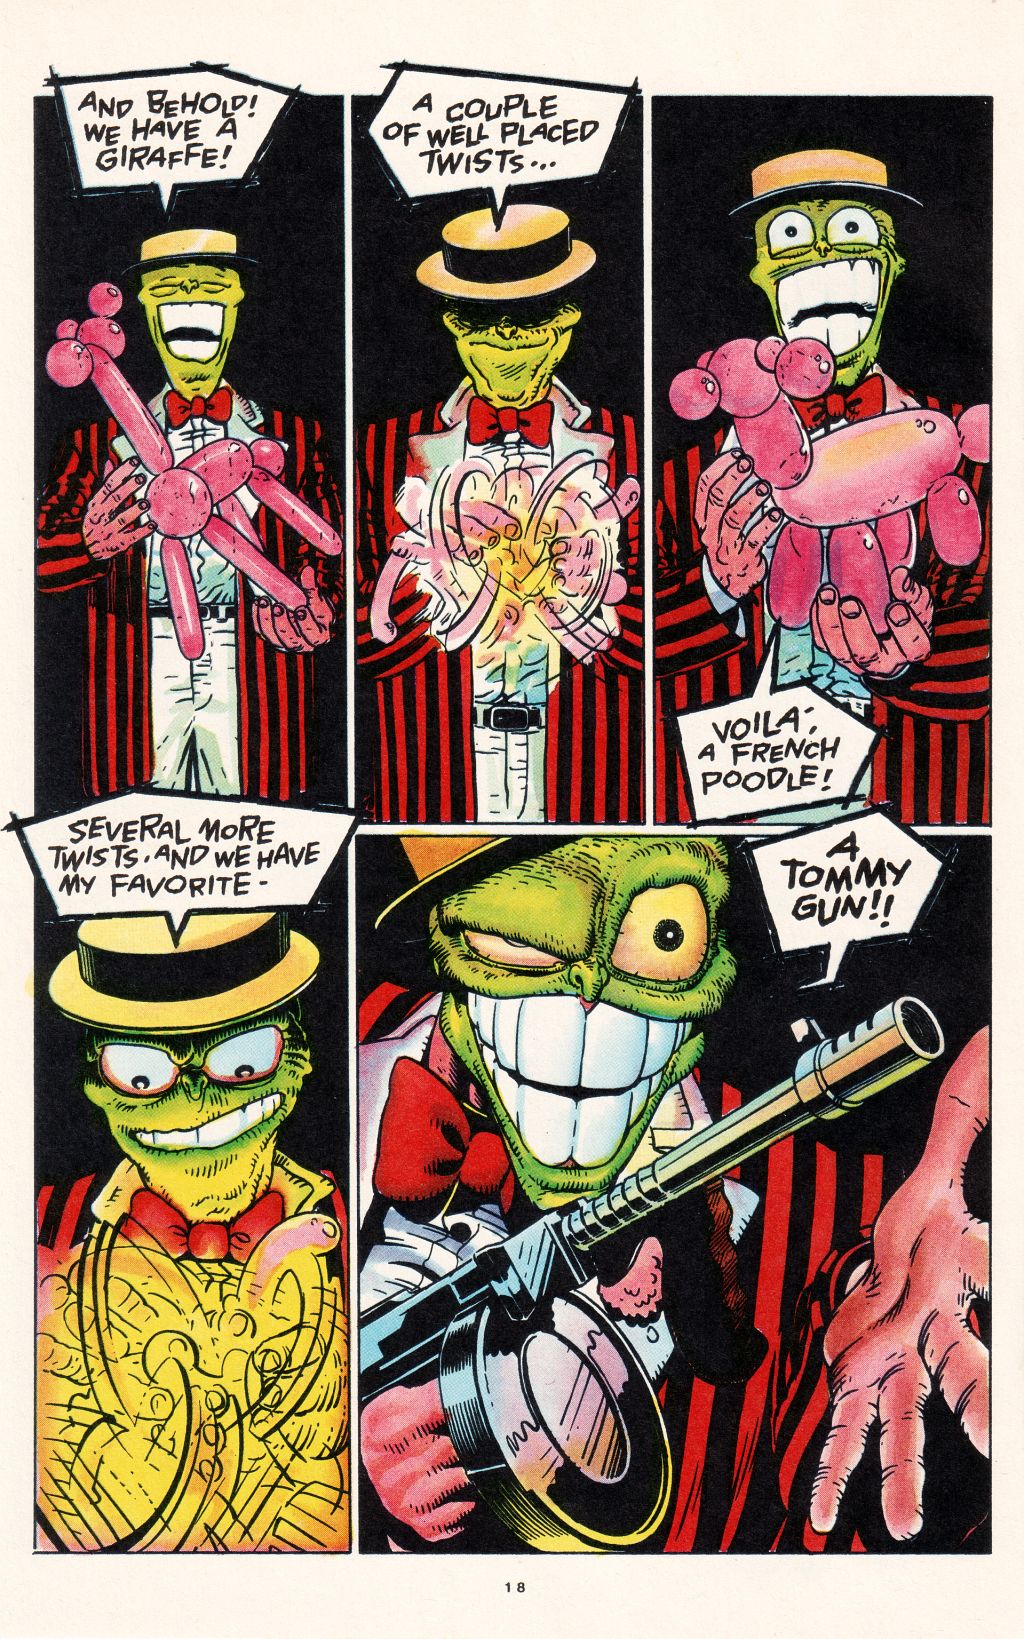 The mask comic book